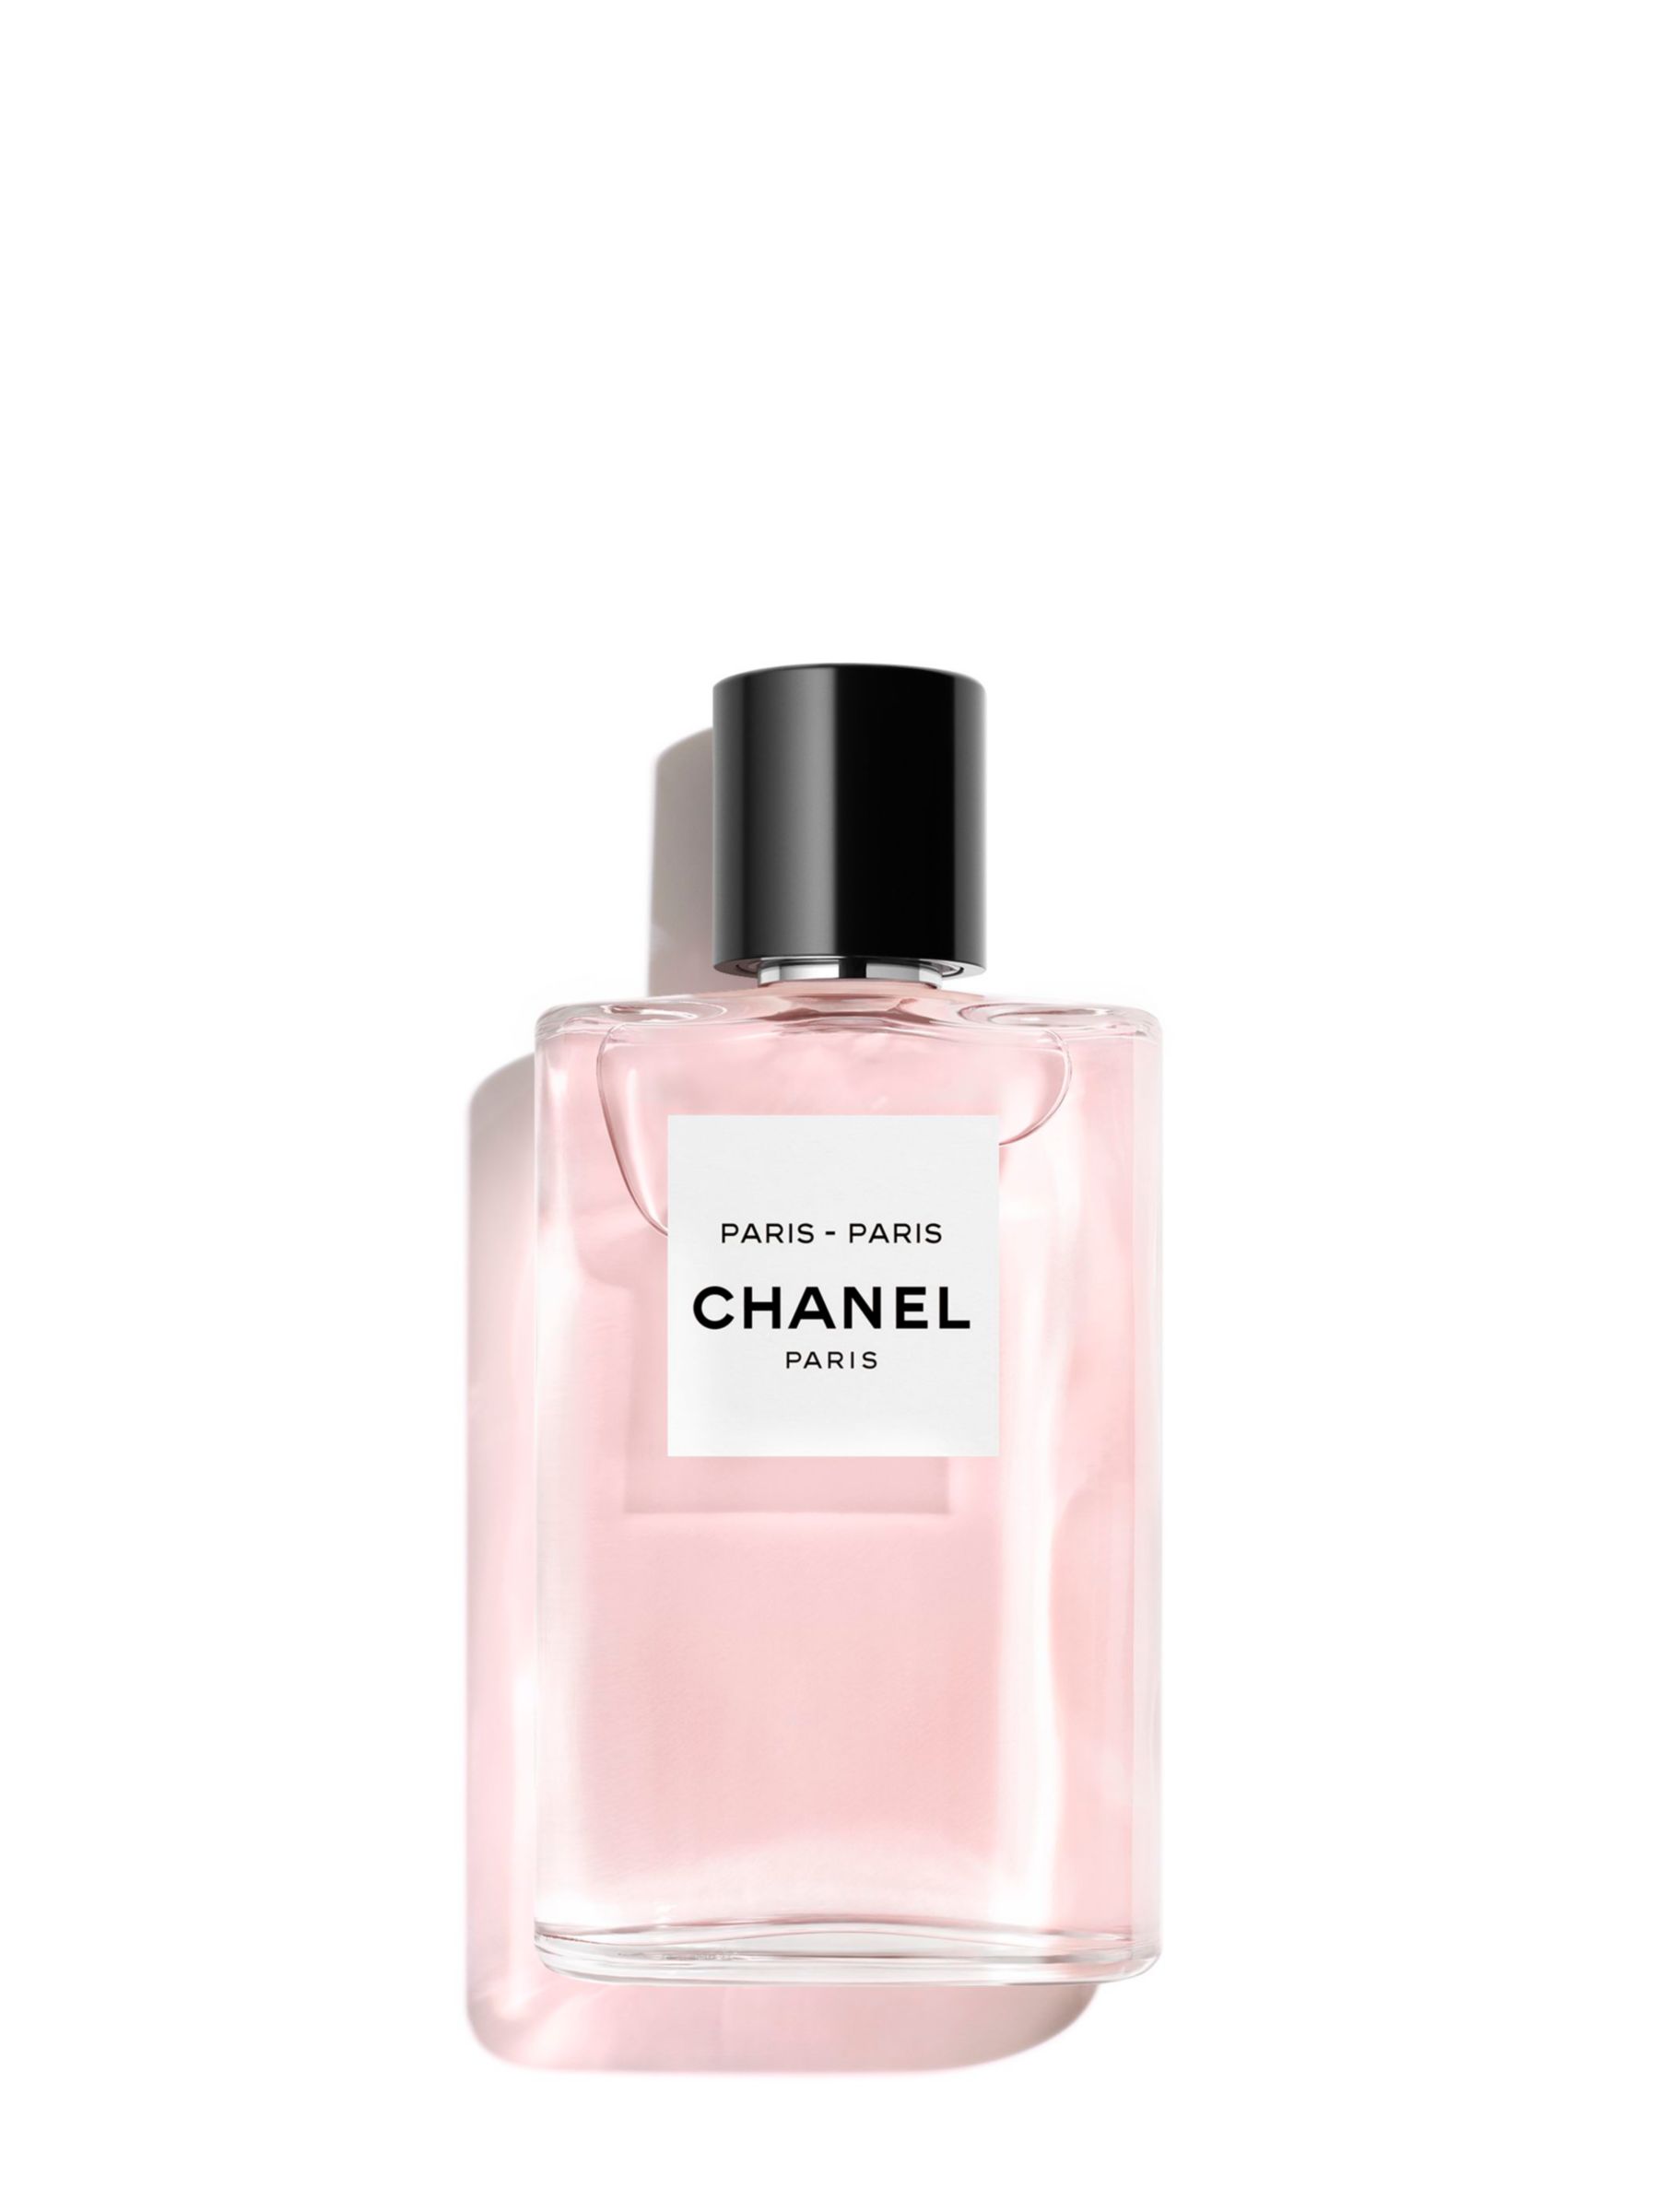 CHANEL Paris-Edimbourg Fragrance, British Beauty Blogger